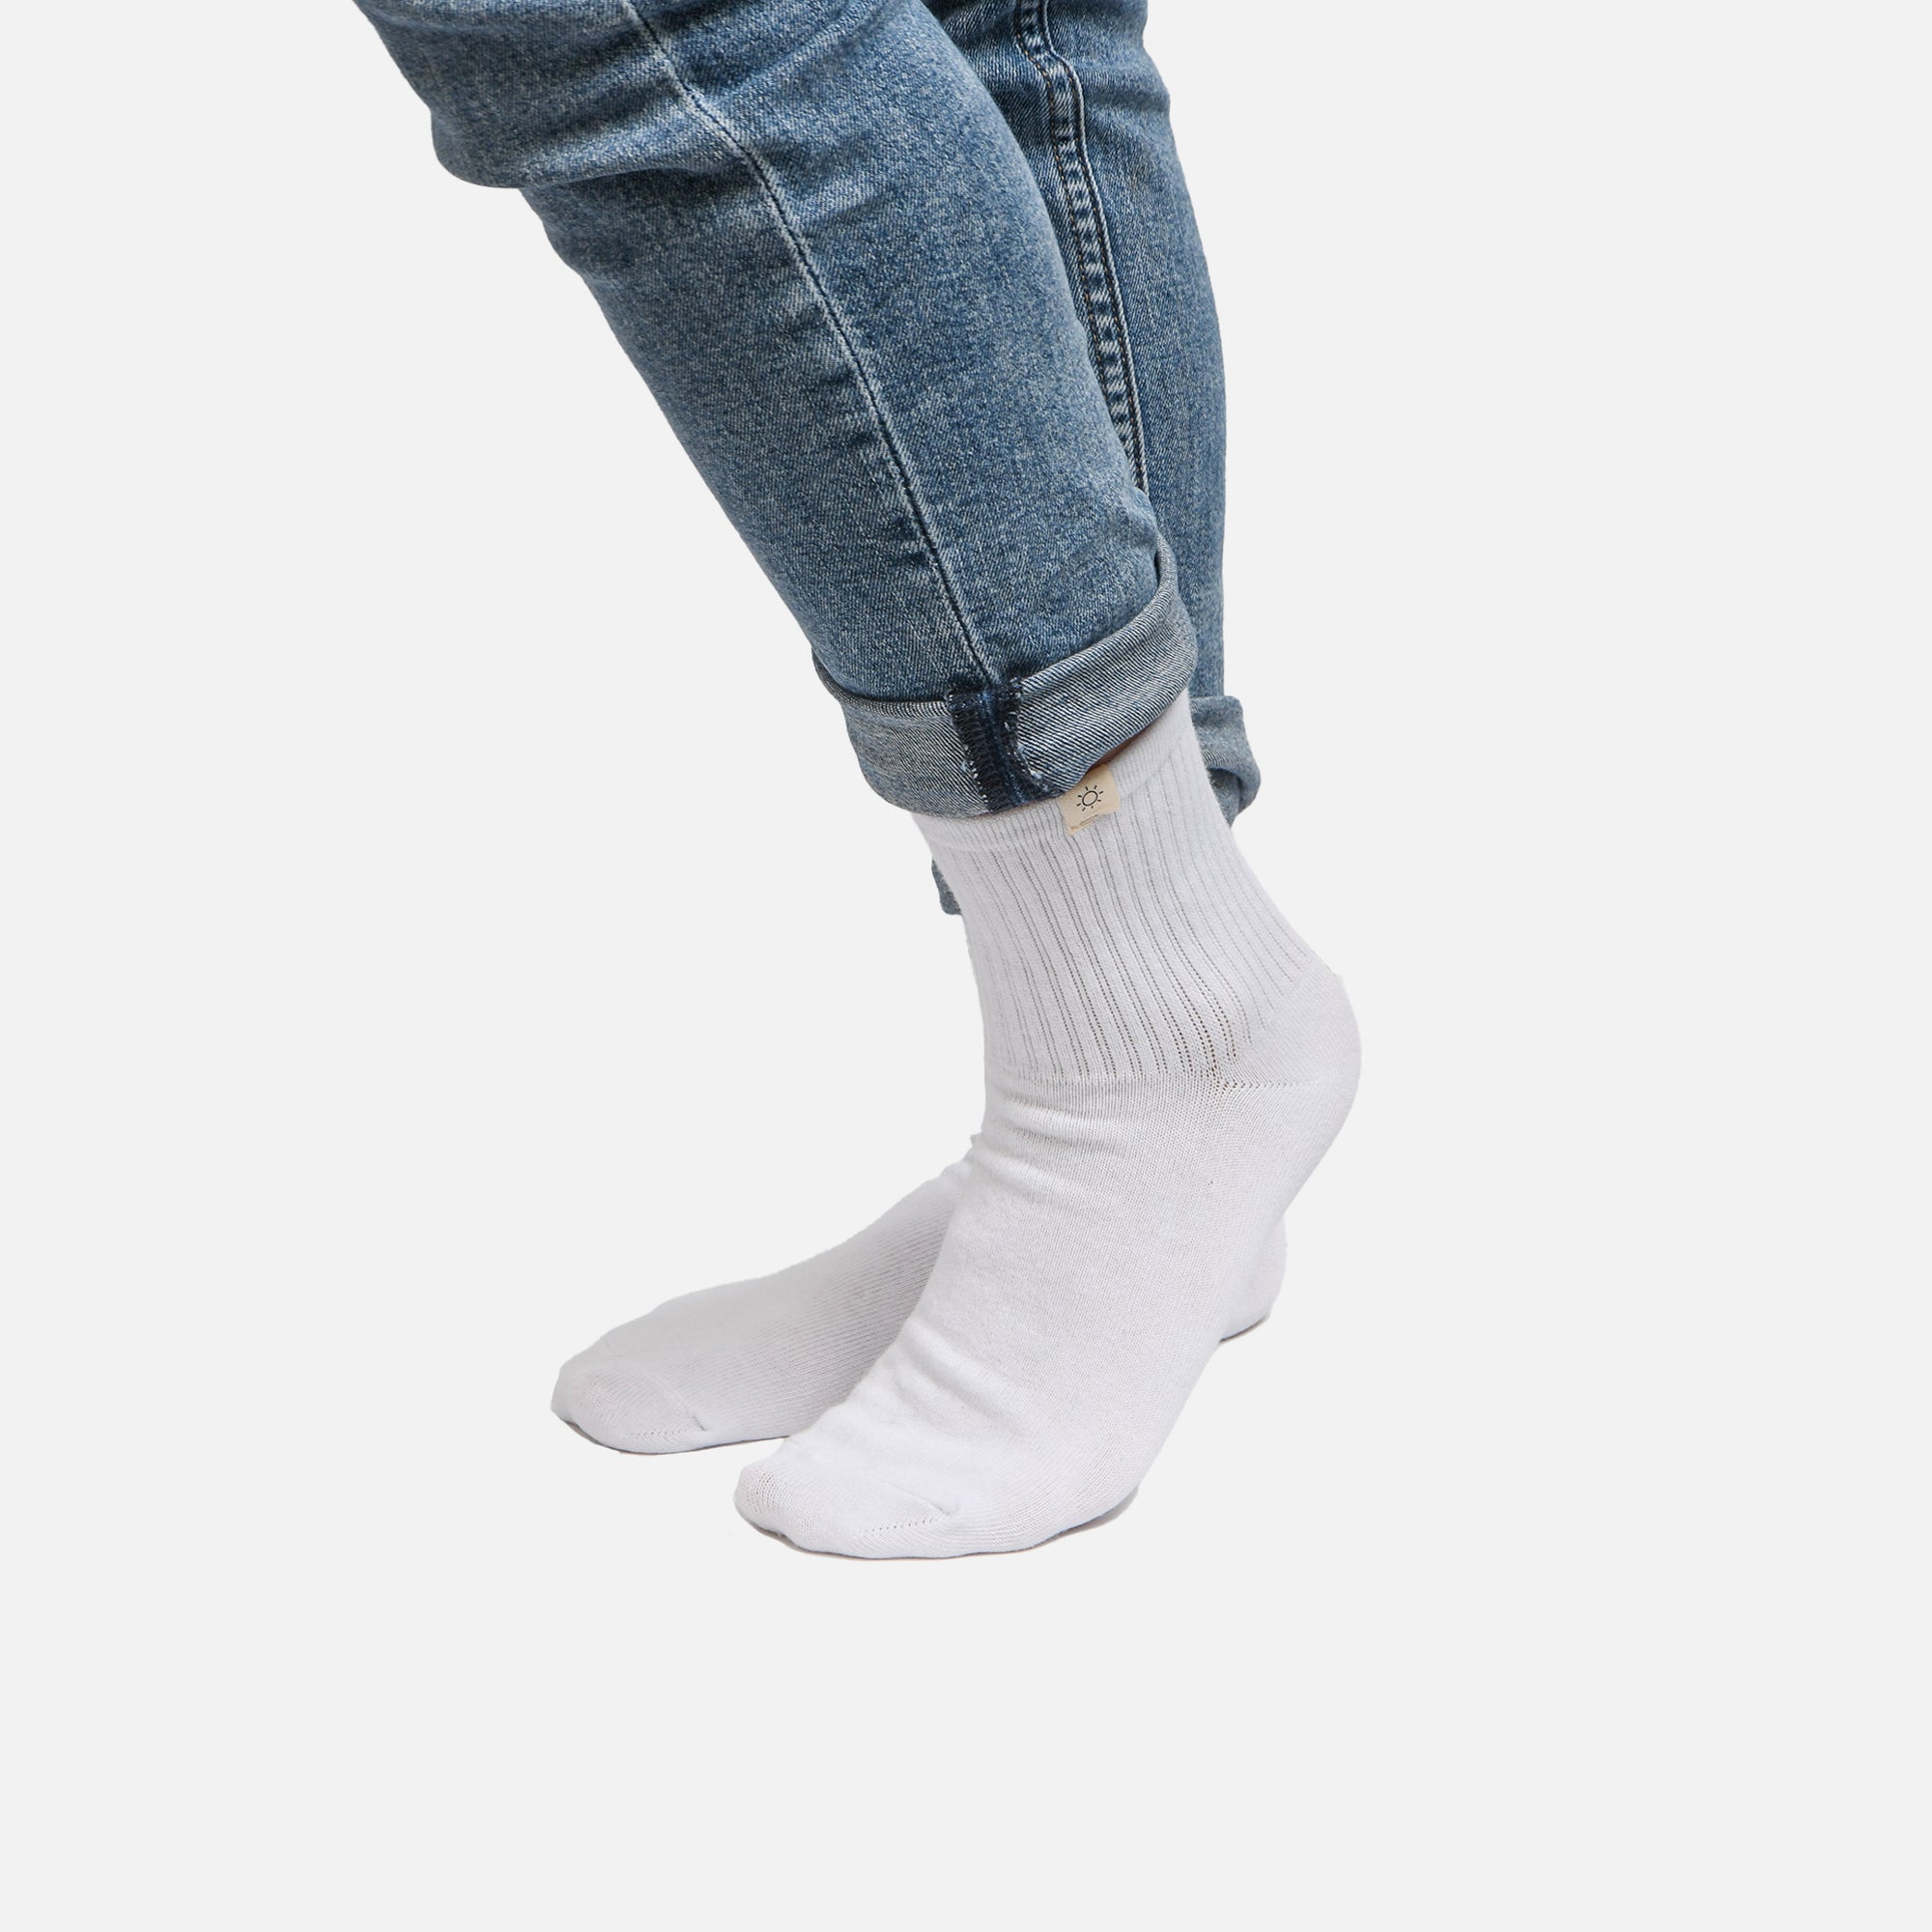 White socks with sun label